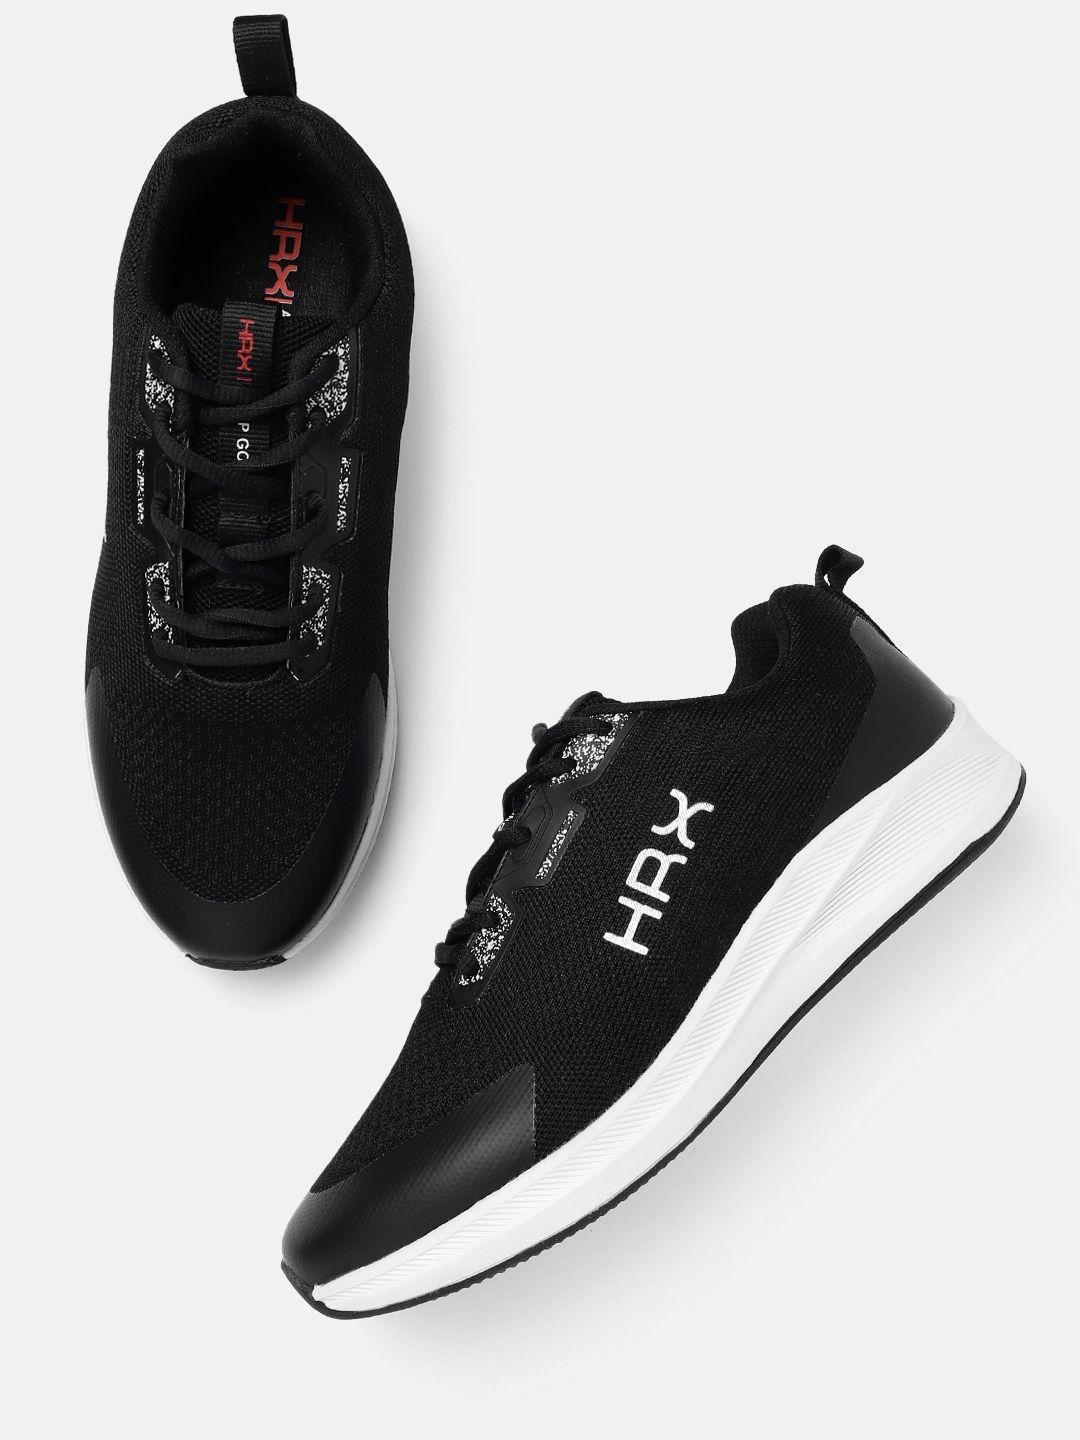 hrx by hrithik roshan men woven design running shoes with brand logo detail